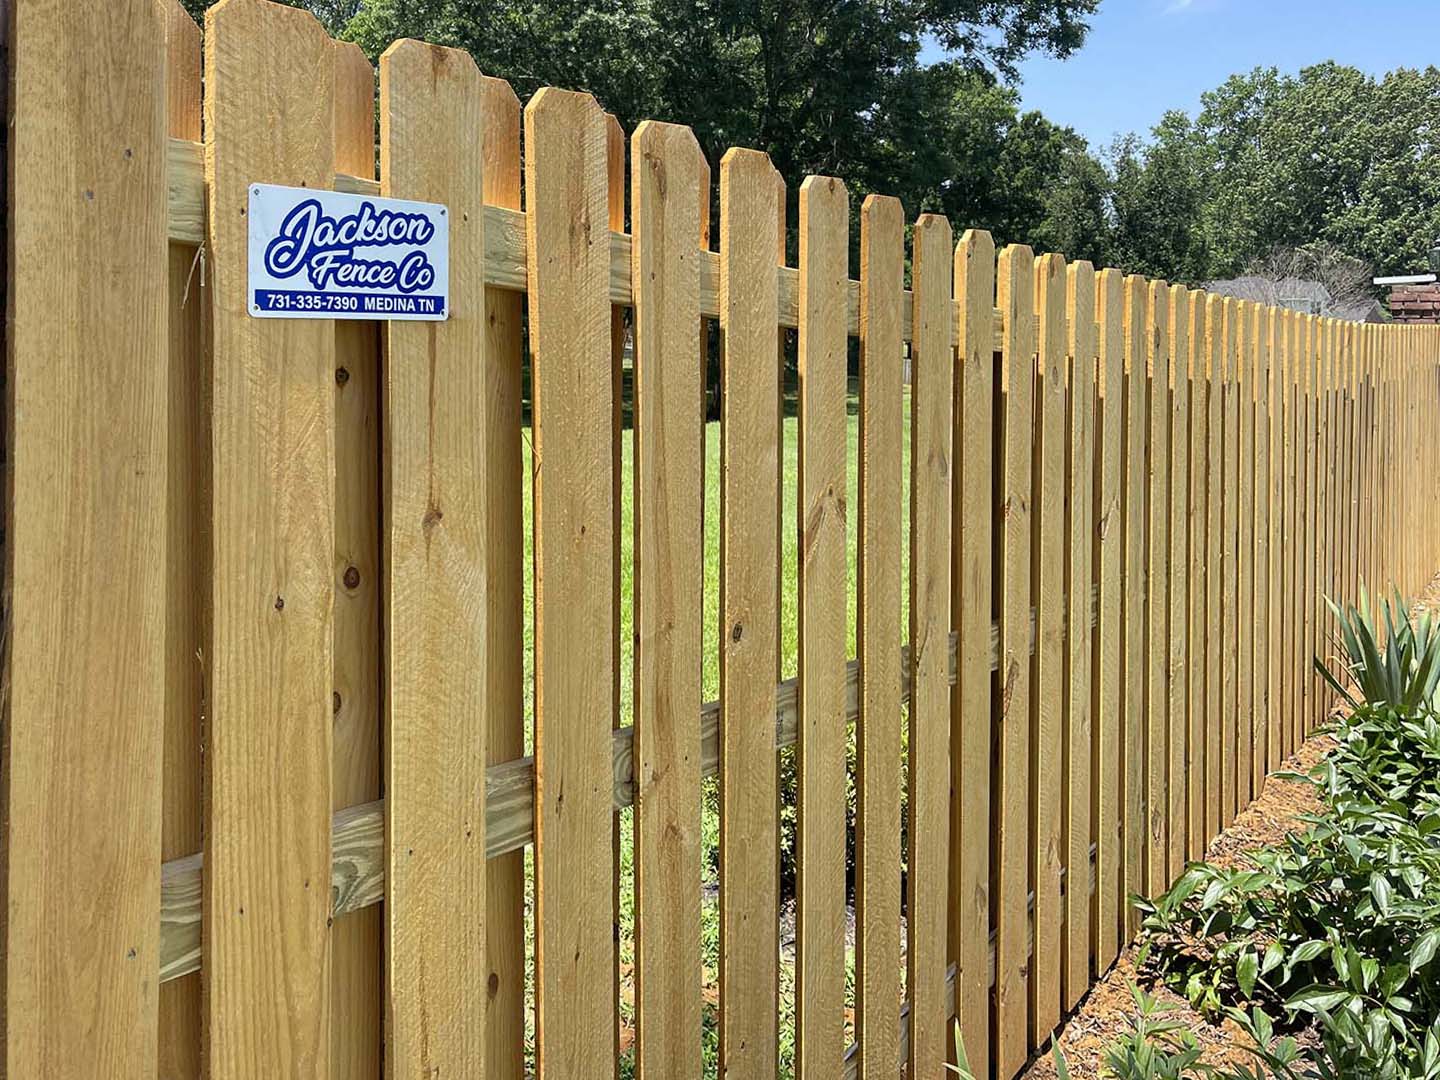  Lexington TN Shadowbox style wood fence